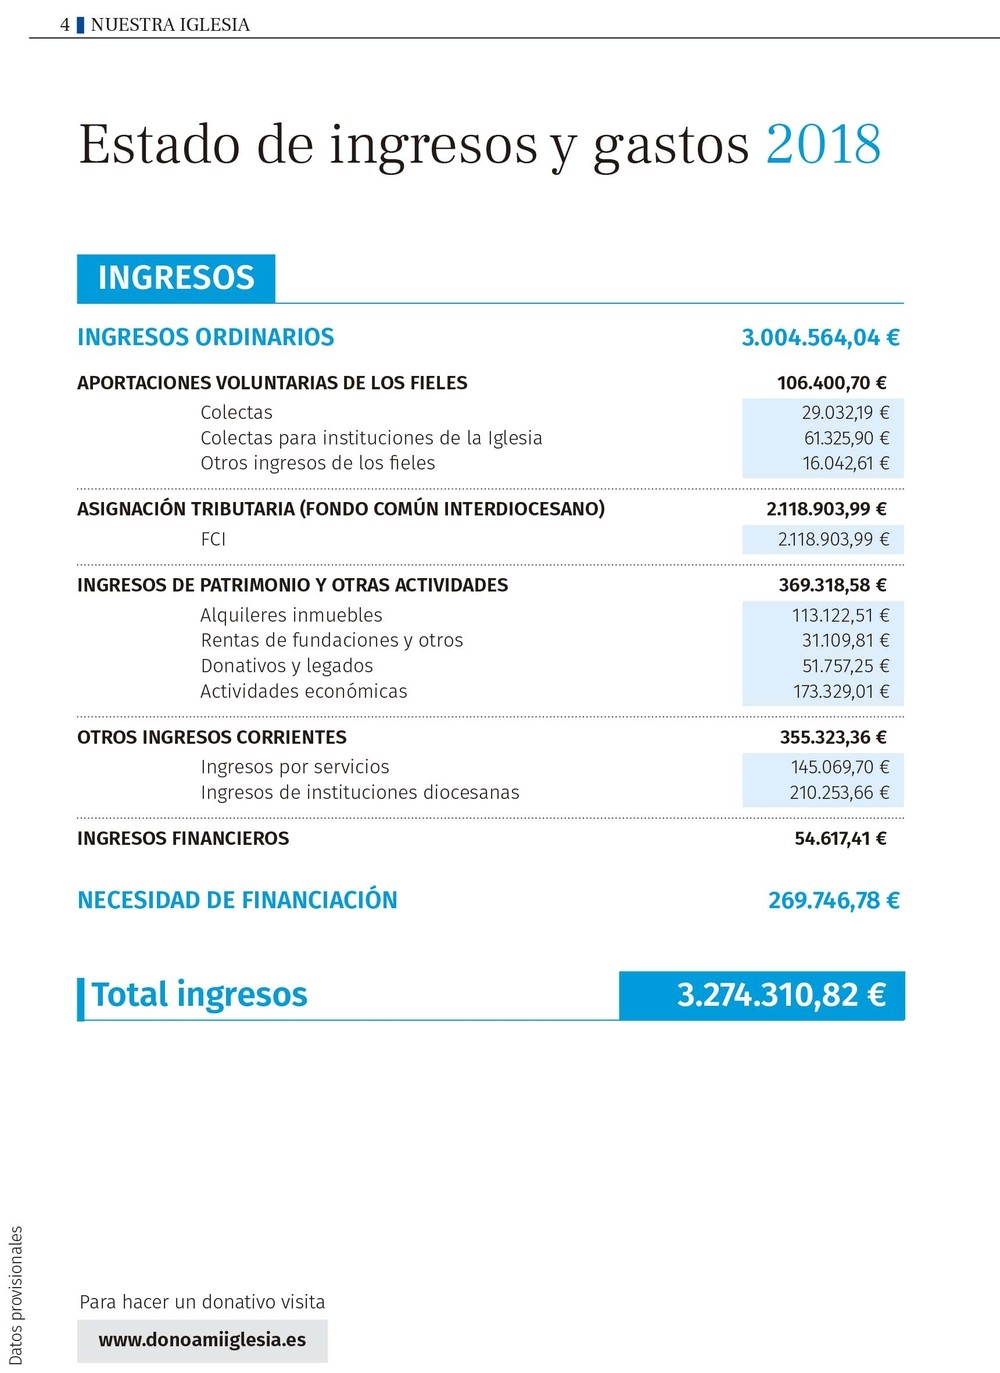 La Iglesia gastó en 2018  en Segovia 3,2 millones de euros